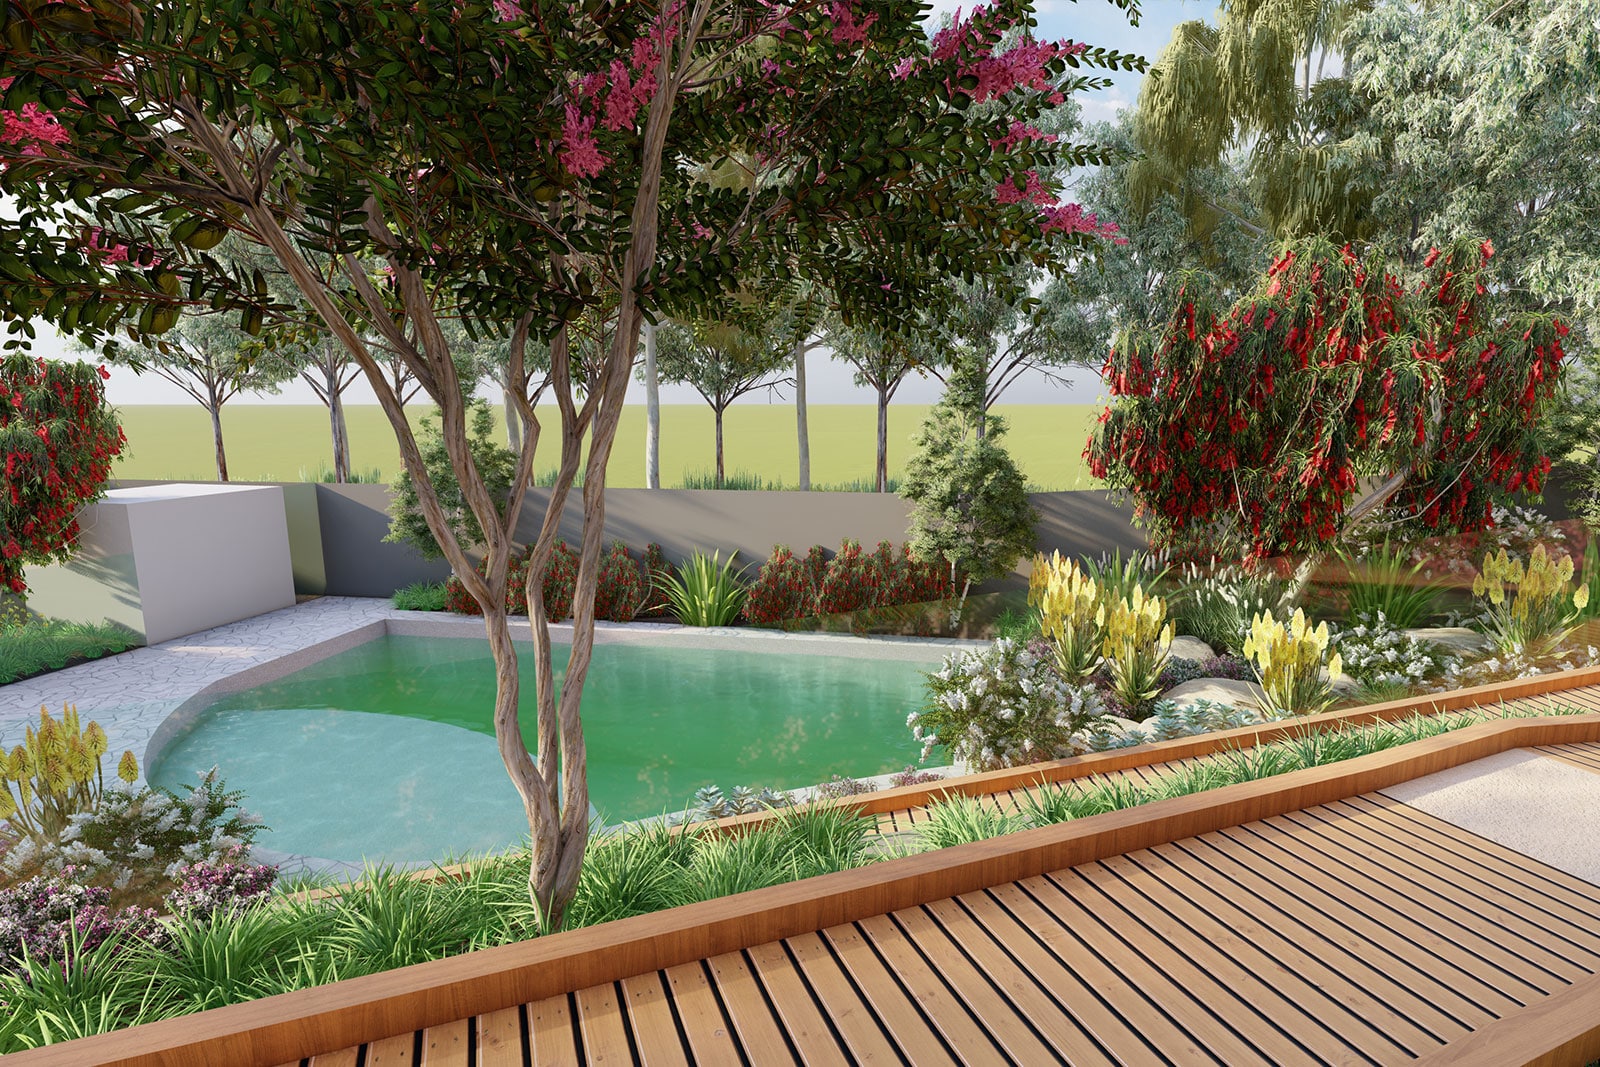 Brisbane residential garden design Australian native